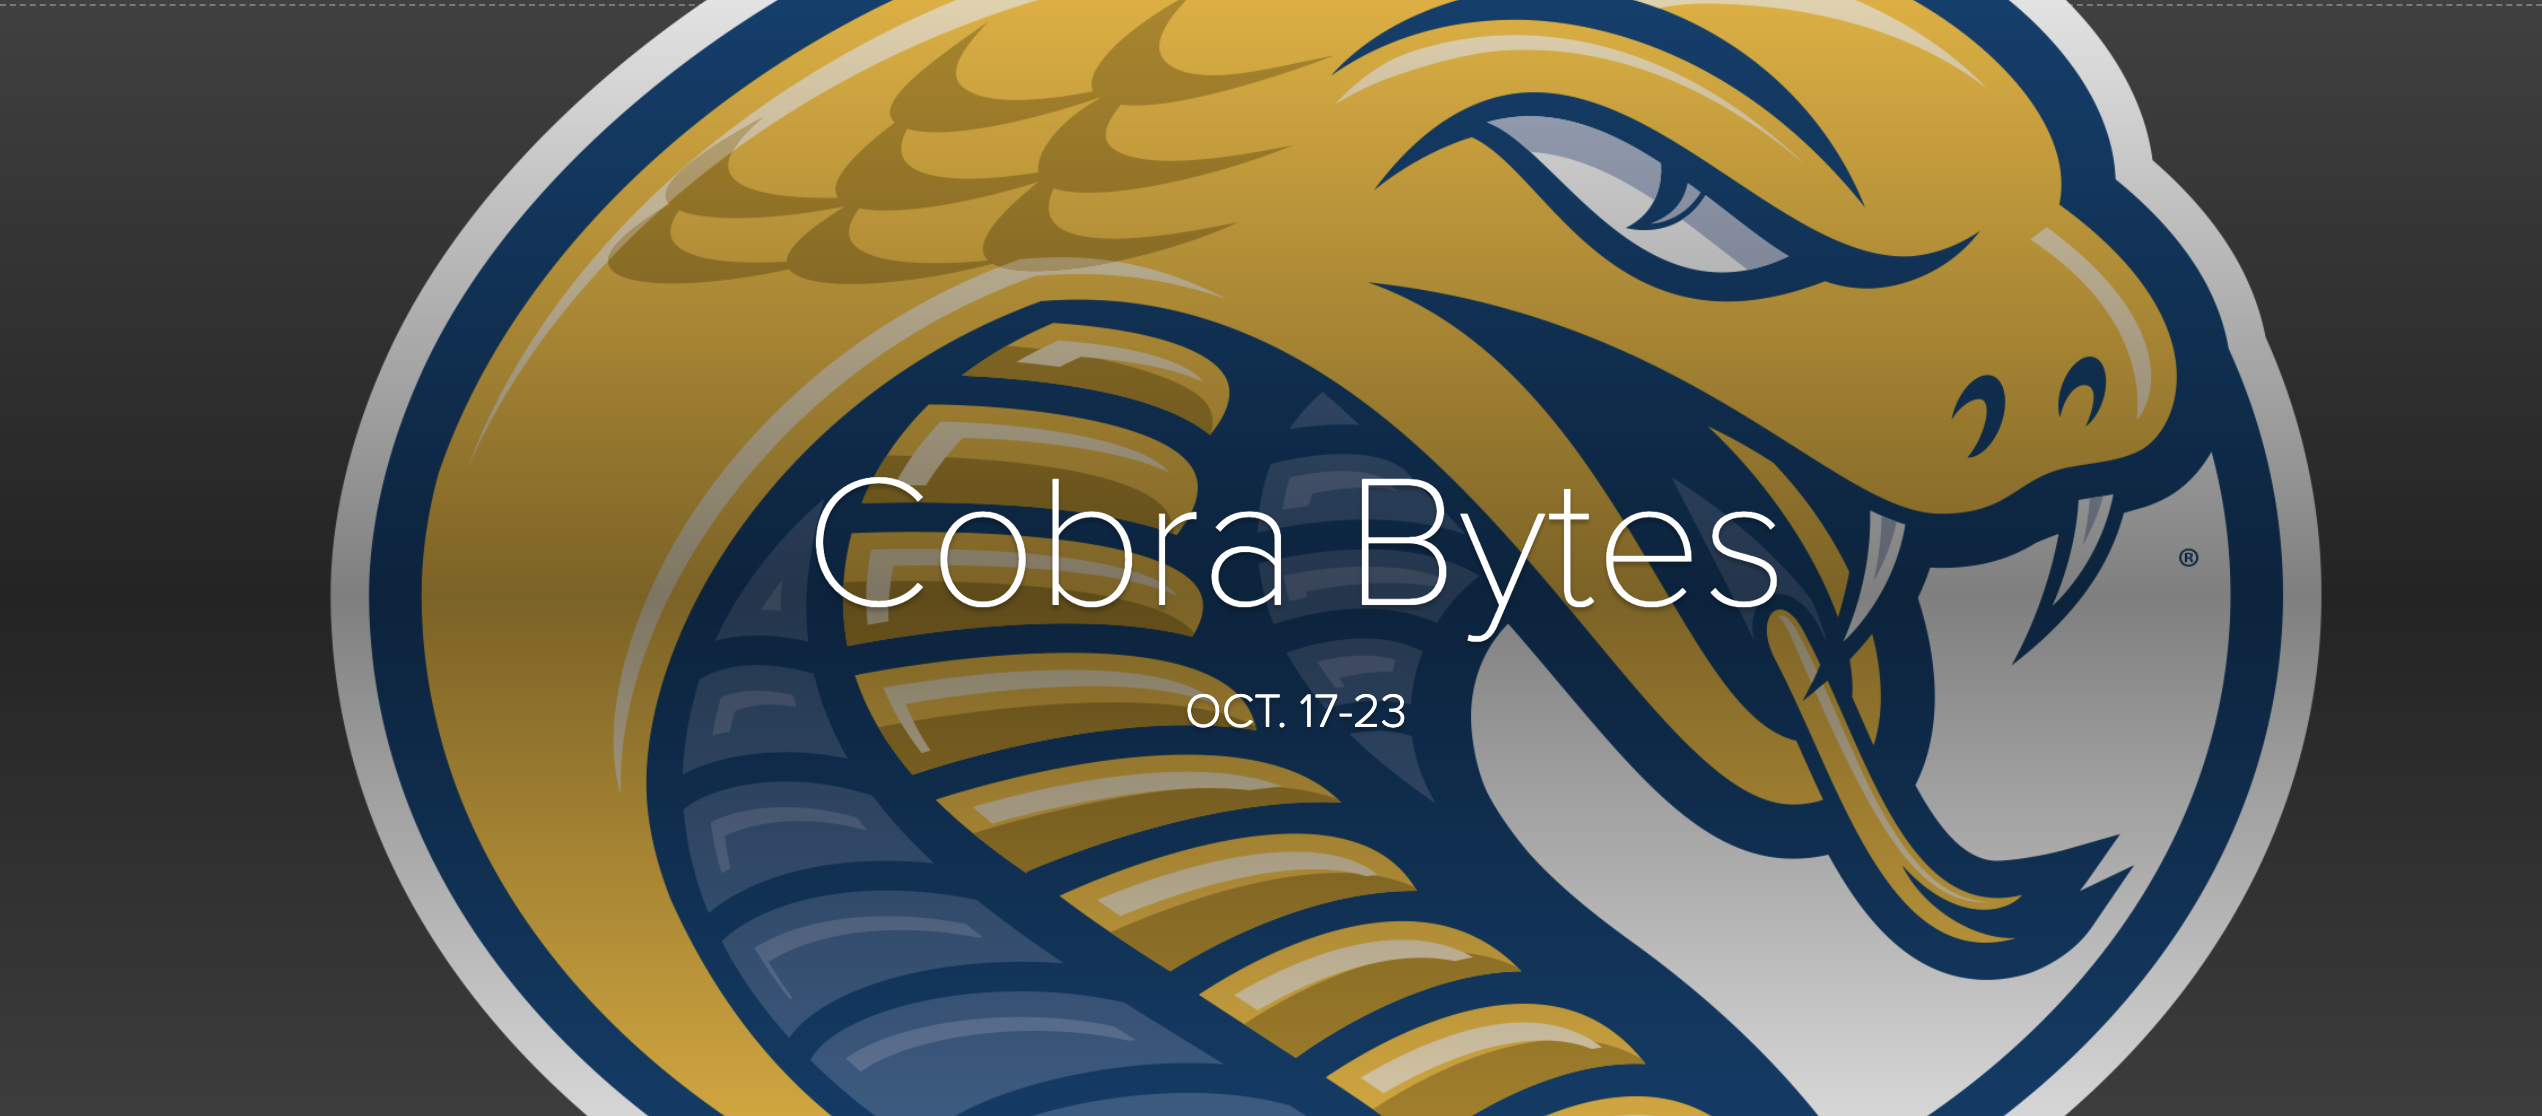 Cobra Bytes Oct. 17-23